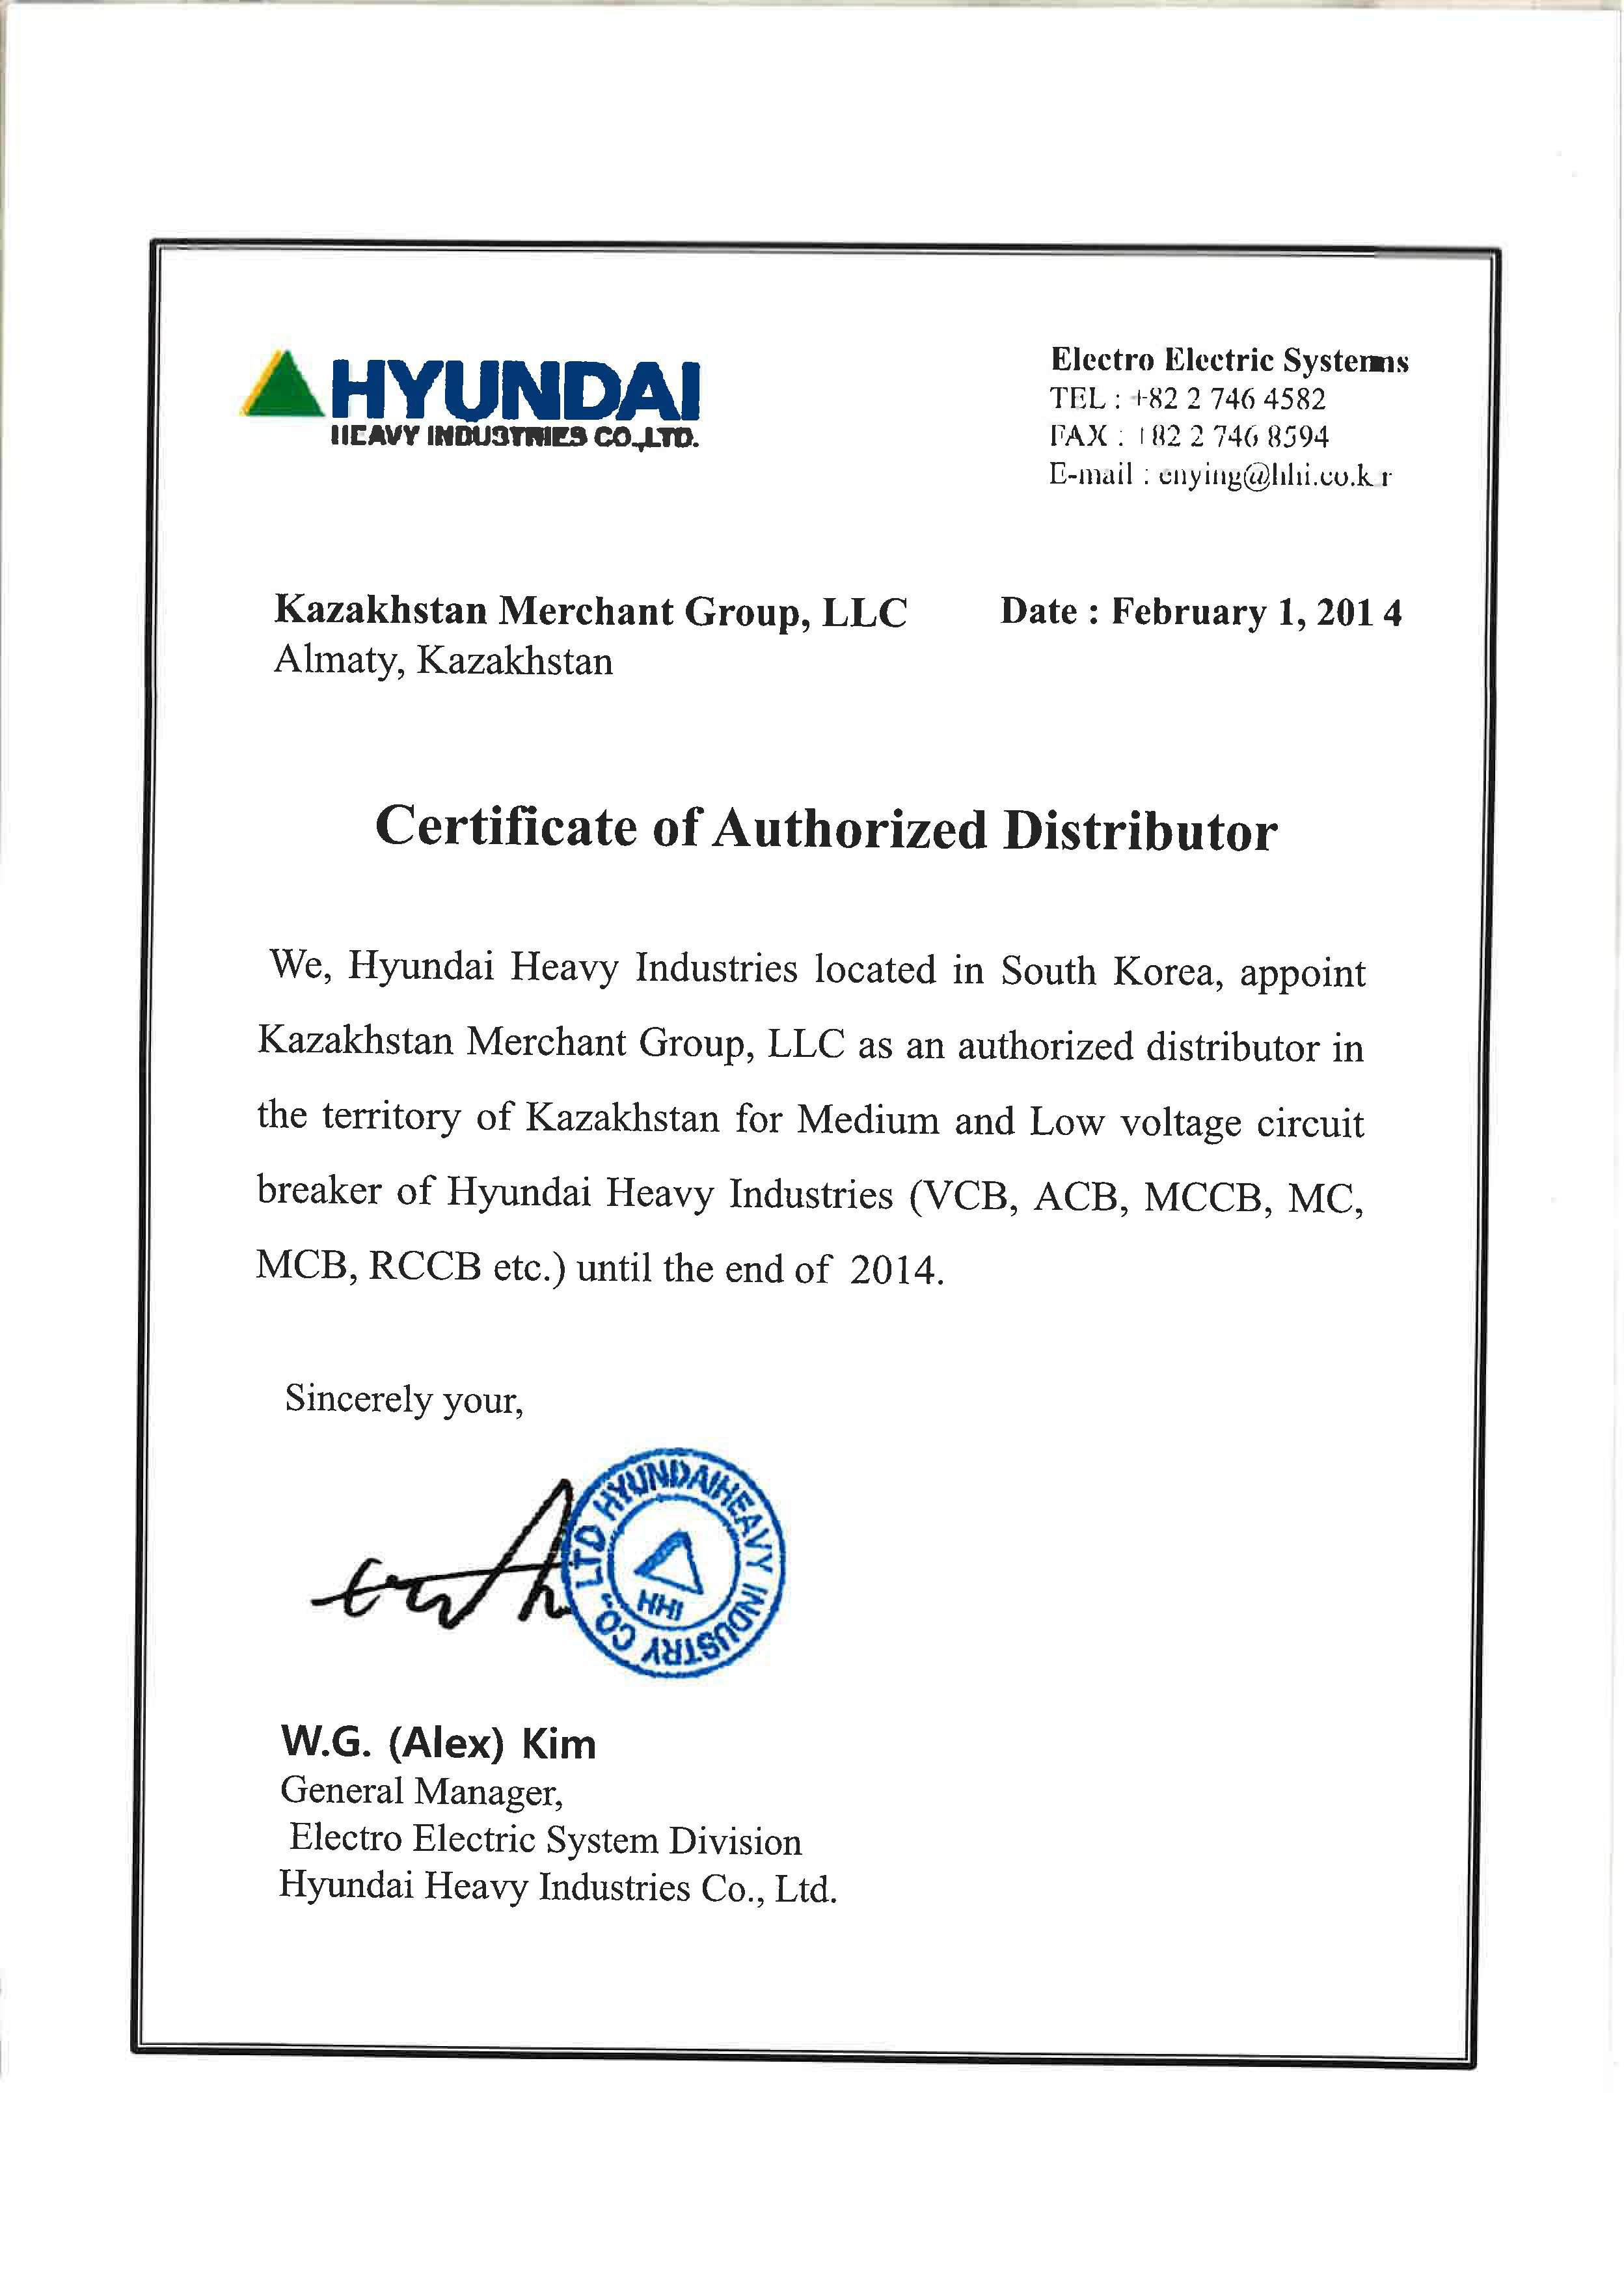 Сертификат HYUNDAI 2014 KMG